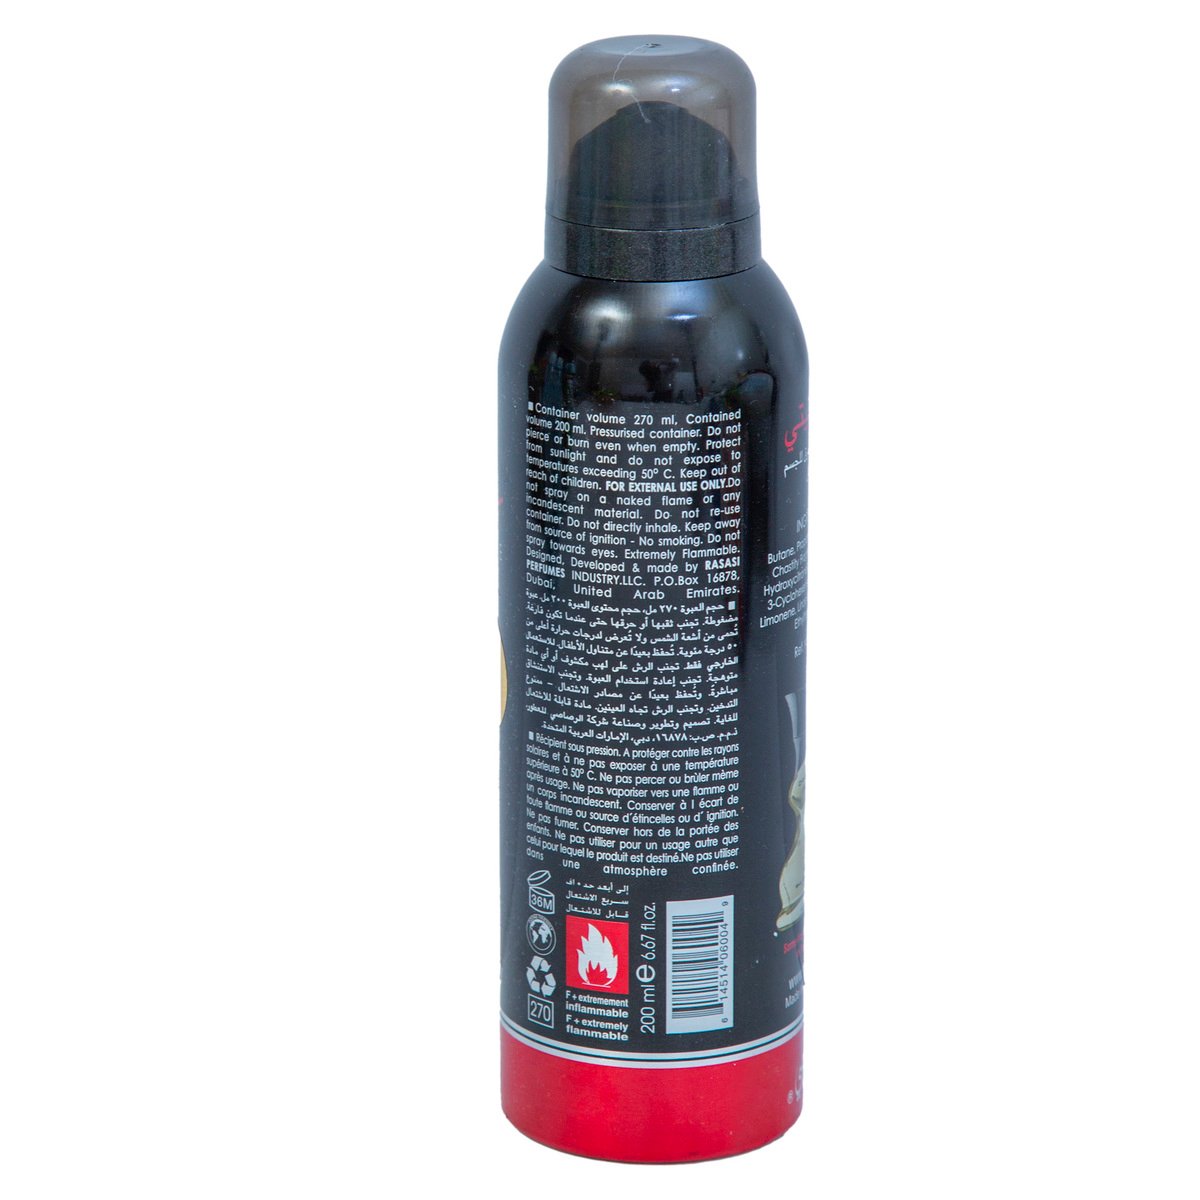 Rasasi Deodorant Body Spray For Men 200 ml